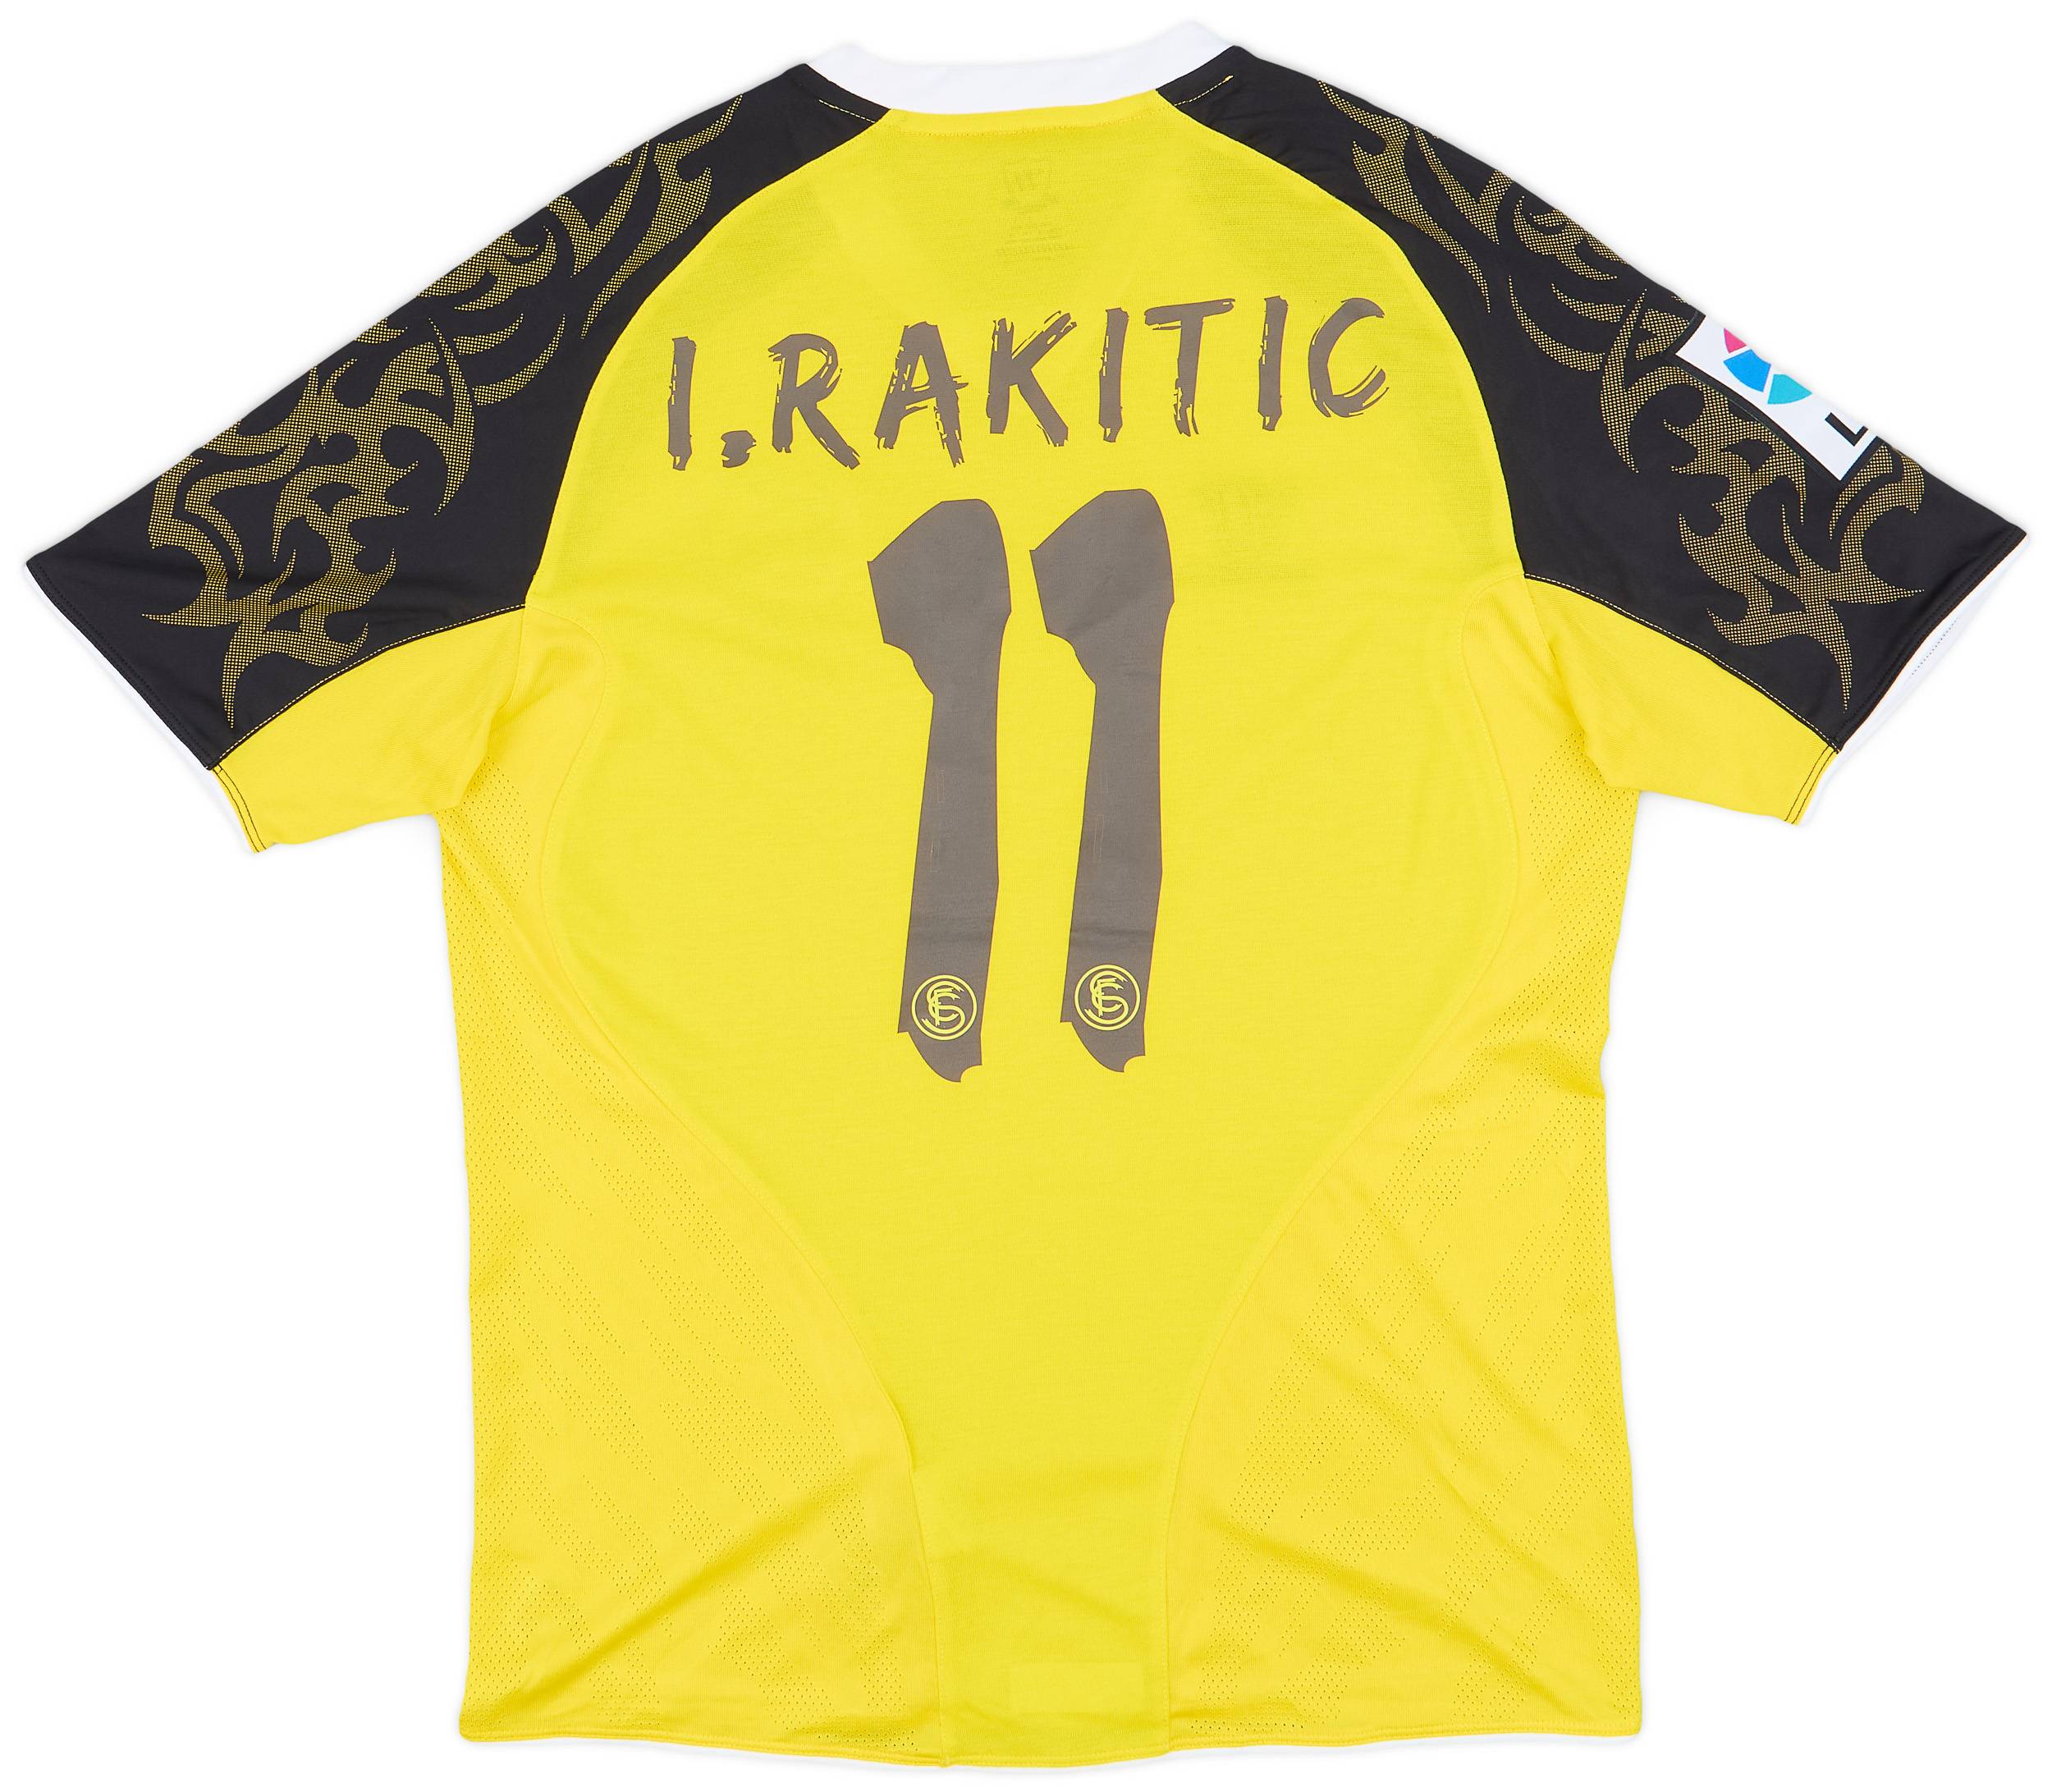 2013-14 Sevilla Third Shirt I.Rakitic #11 - 9/10 - (S)